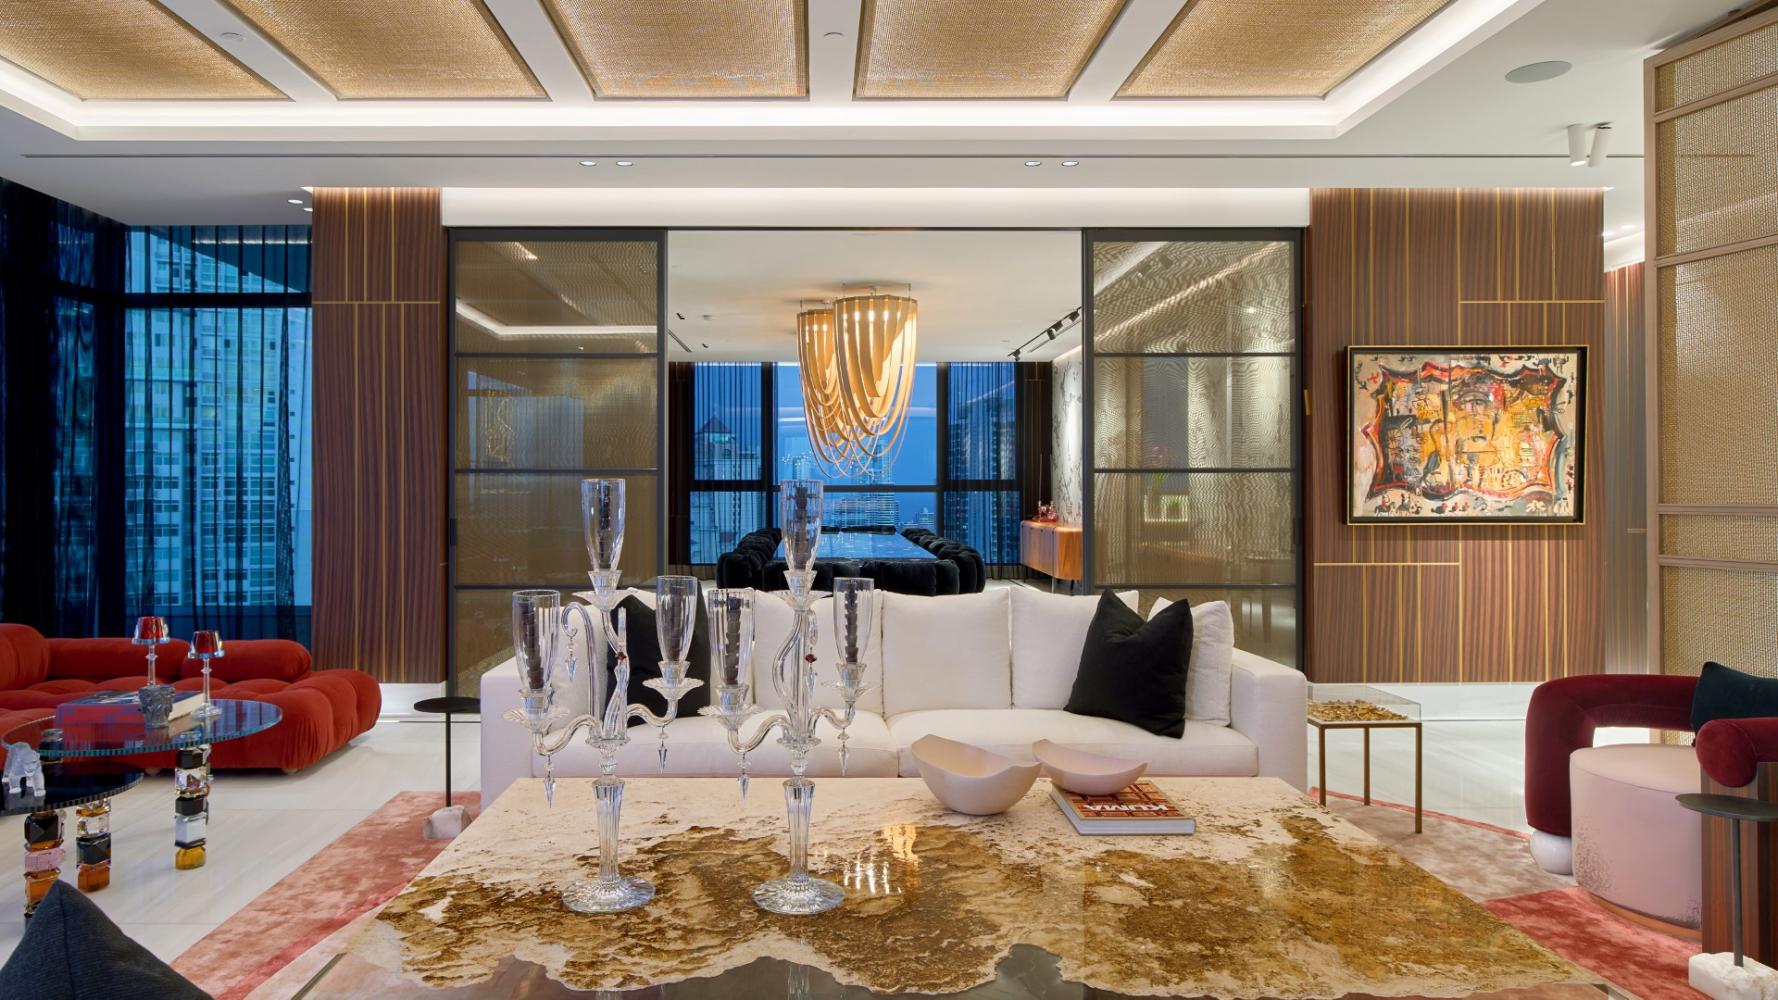 laurameroni a luxury penthouse interior architecture in panama